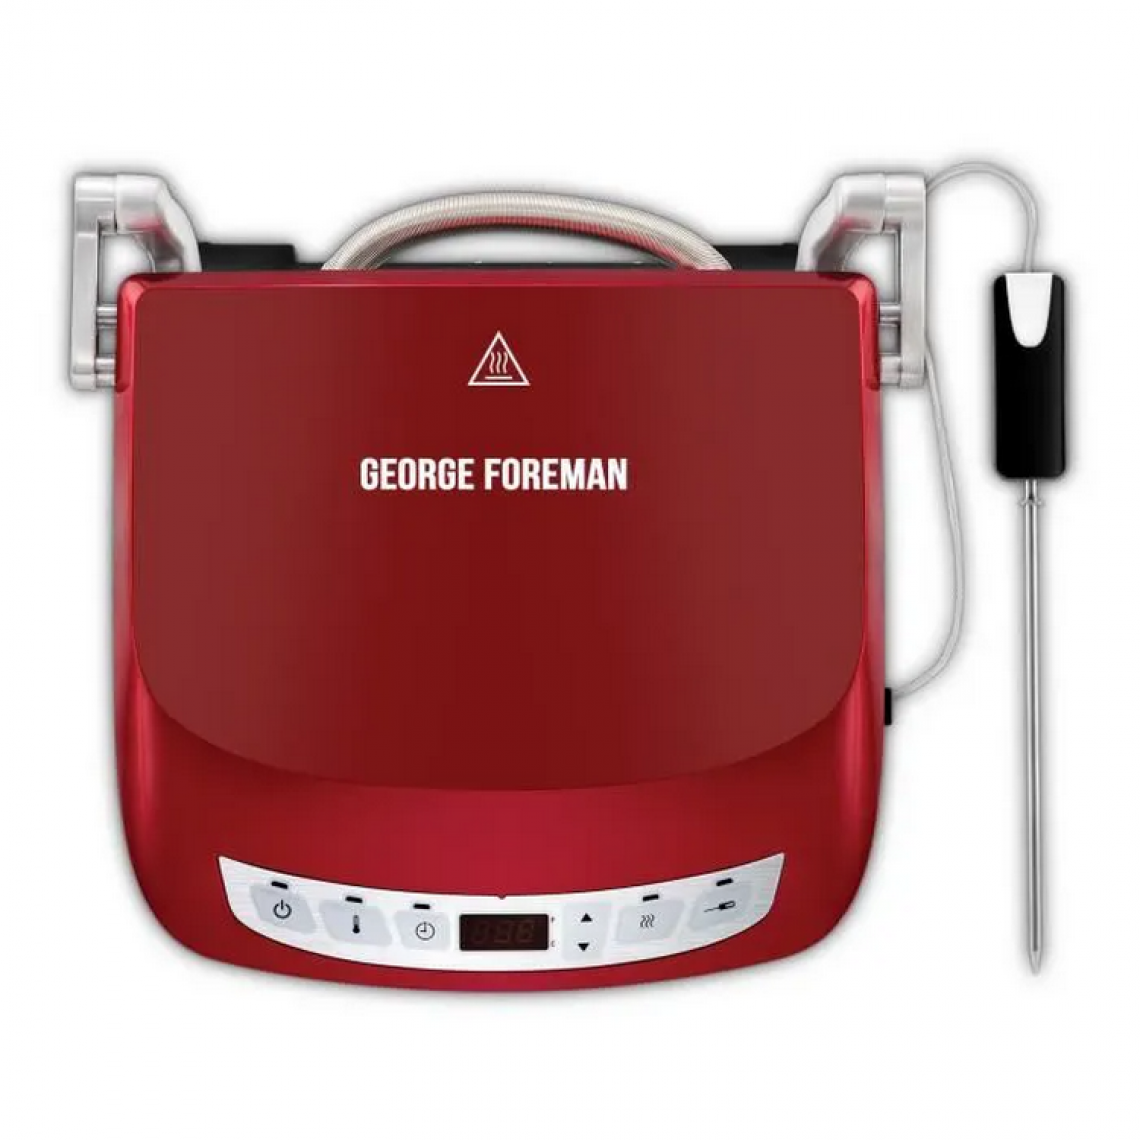 George Foreman - george foreman - 24001-56 - Pierrade, grill